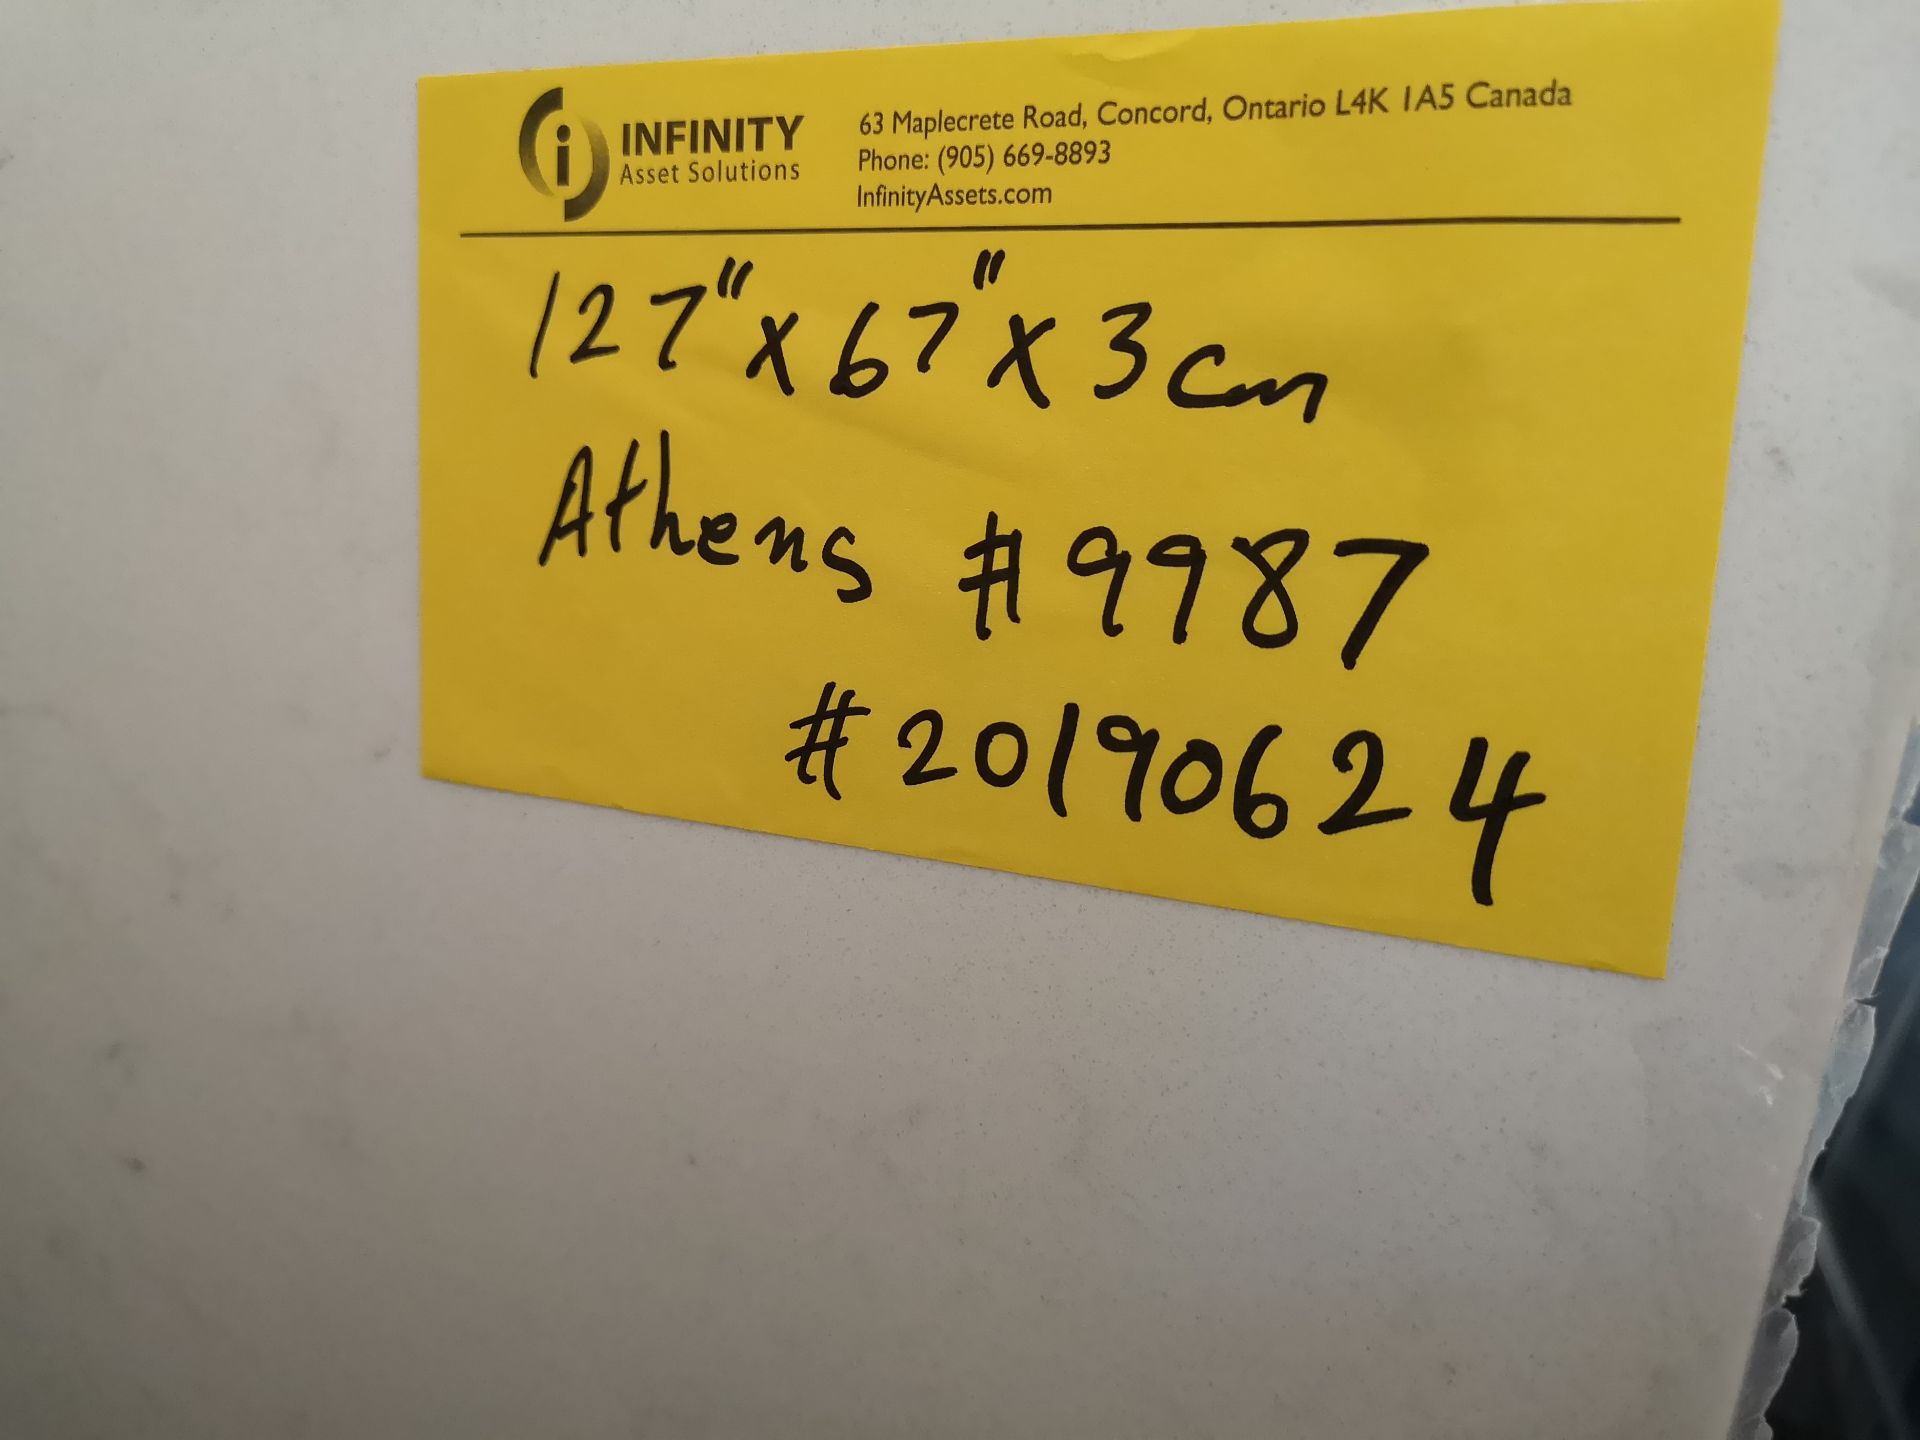 ATHENS 9987 CENTRESTONE QUARTZ APPROX. 129" X 77" X 3CM THICK SLAB (LOADING FEE $25) - Image 2 of 3